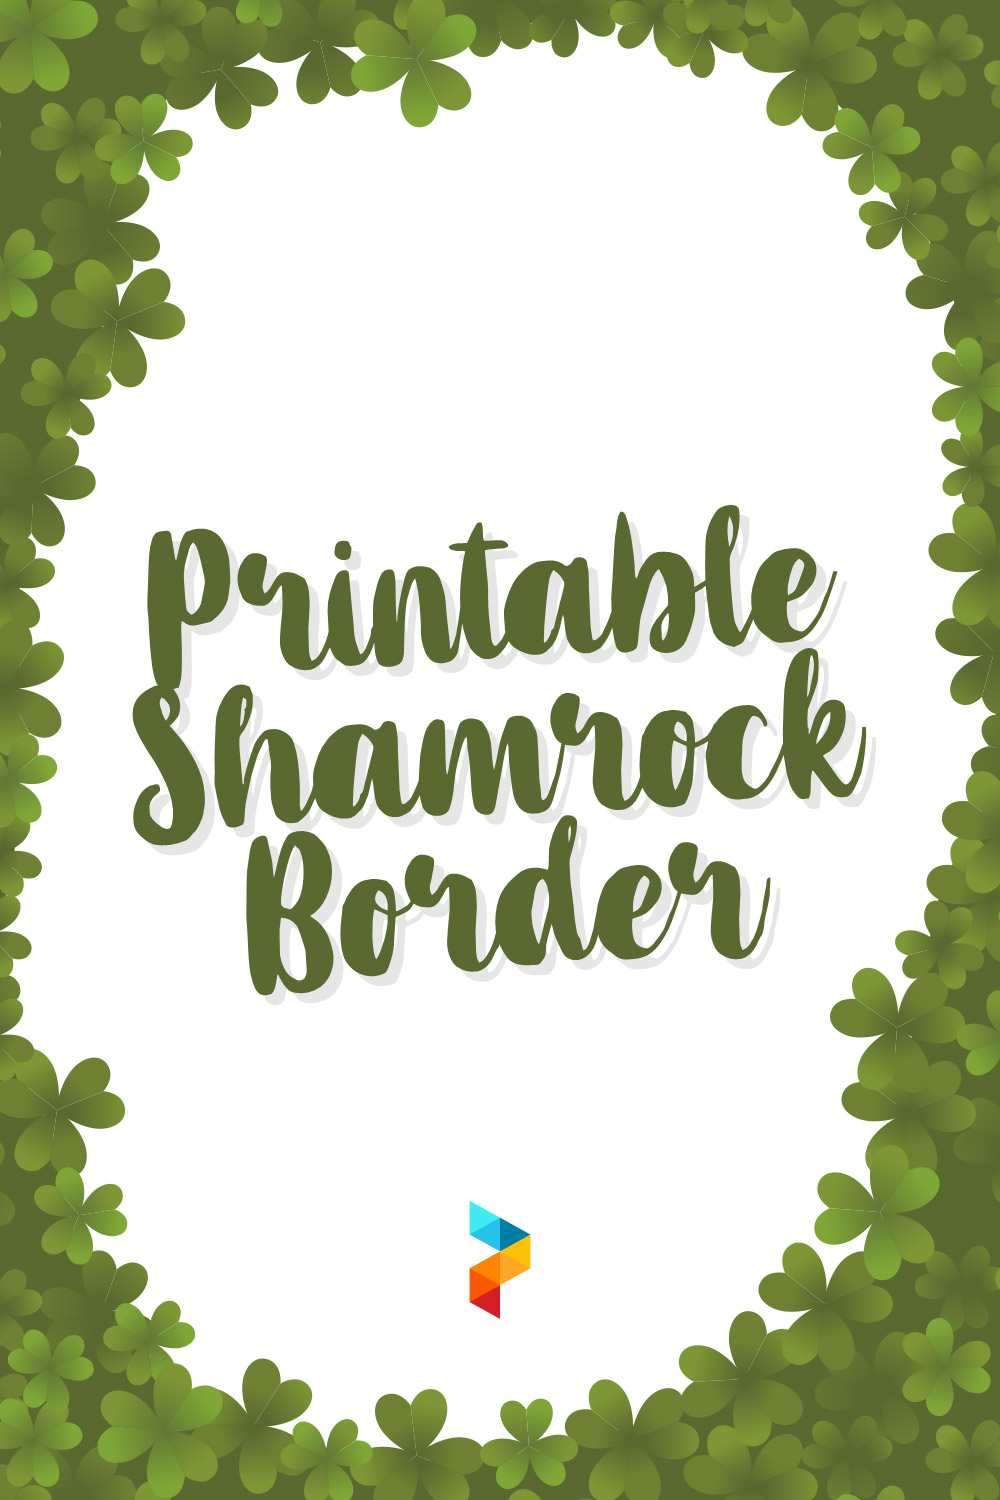 Printable Shamrock Border